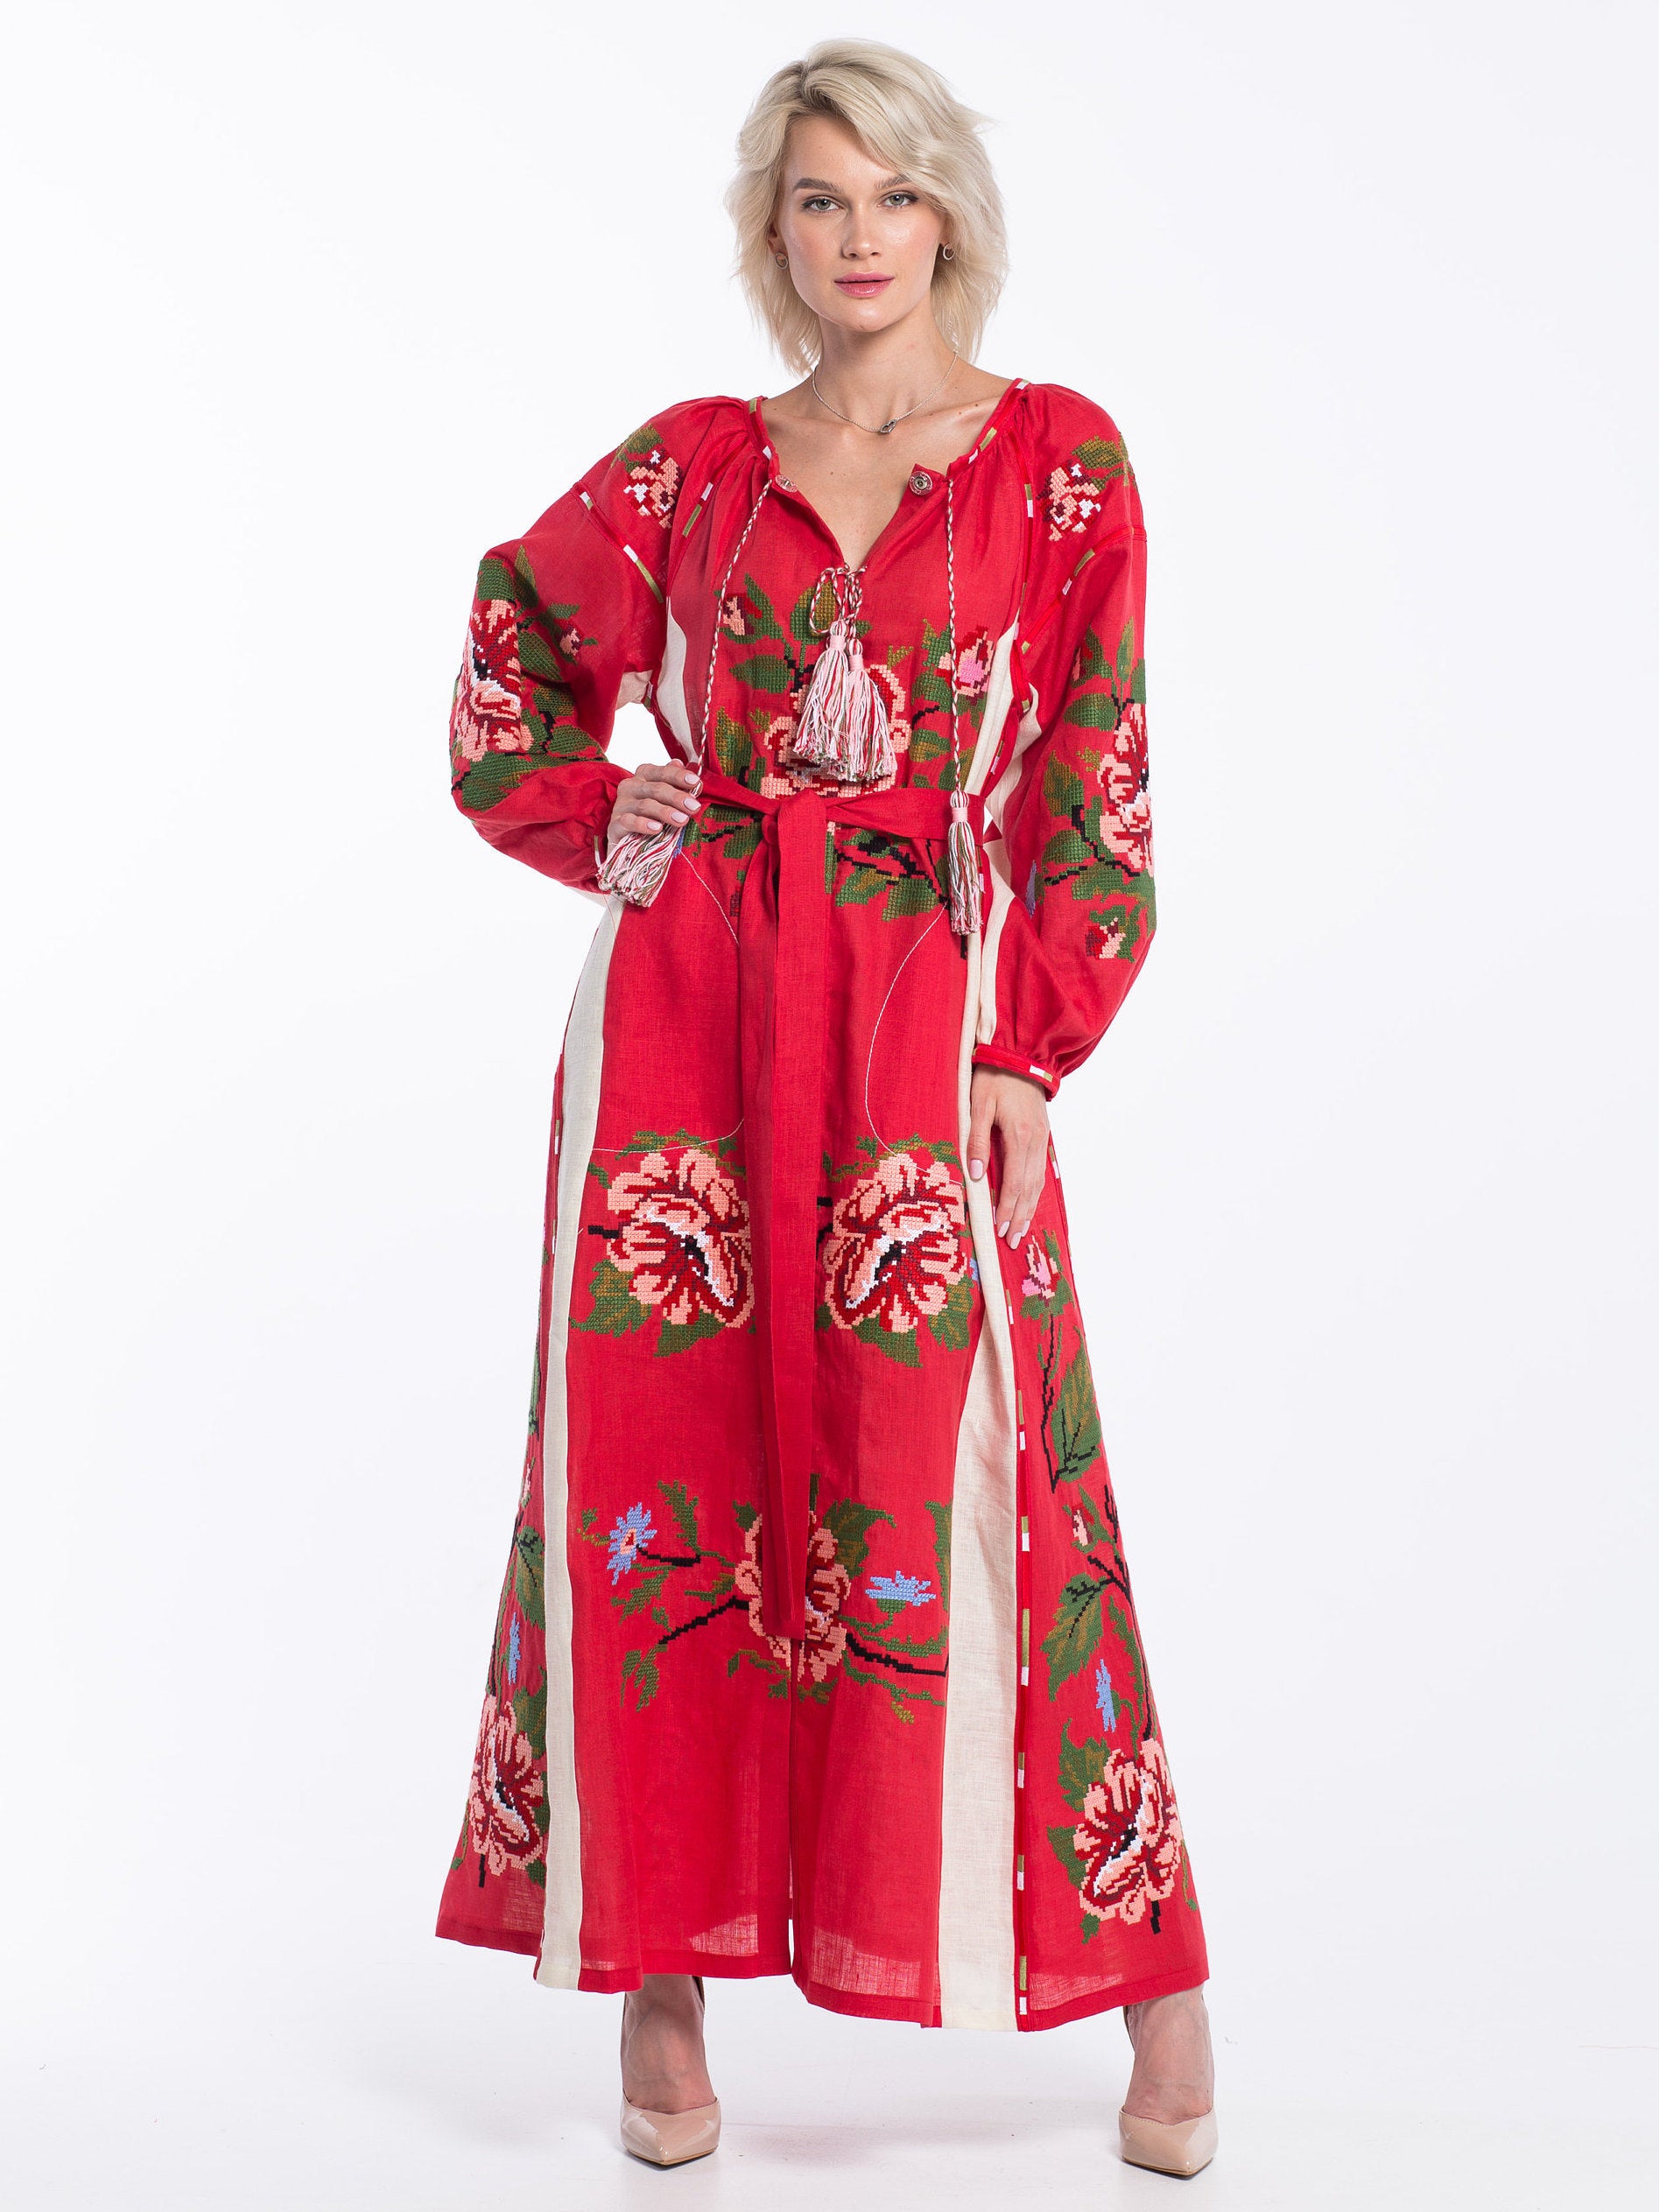 Roses embroidered linen dress kaftan maxi Beach wedding clothing